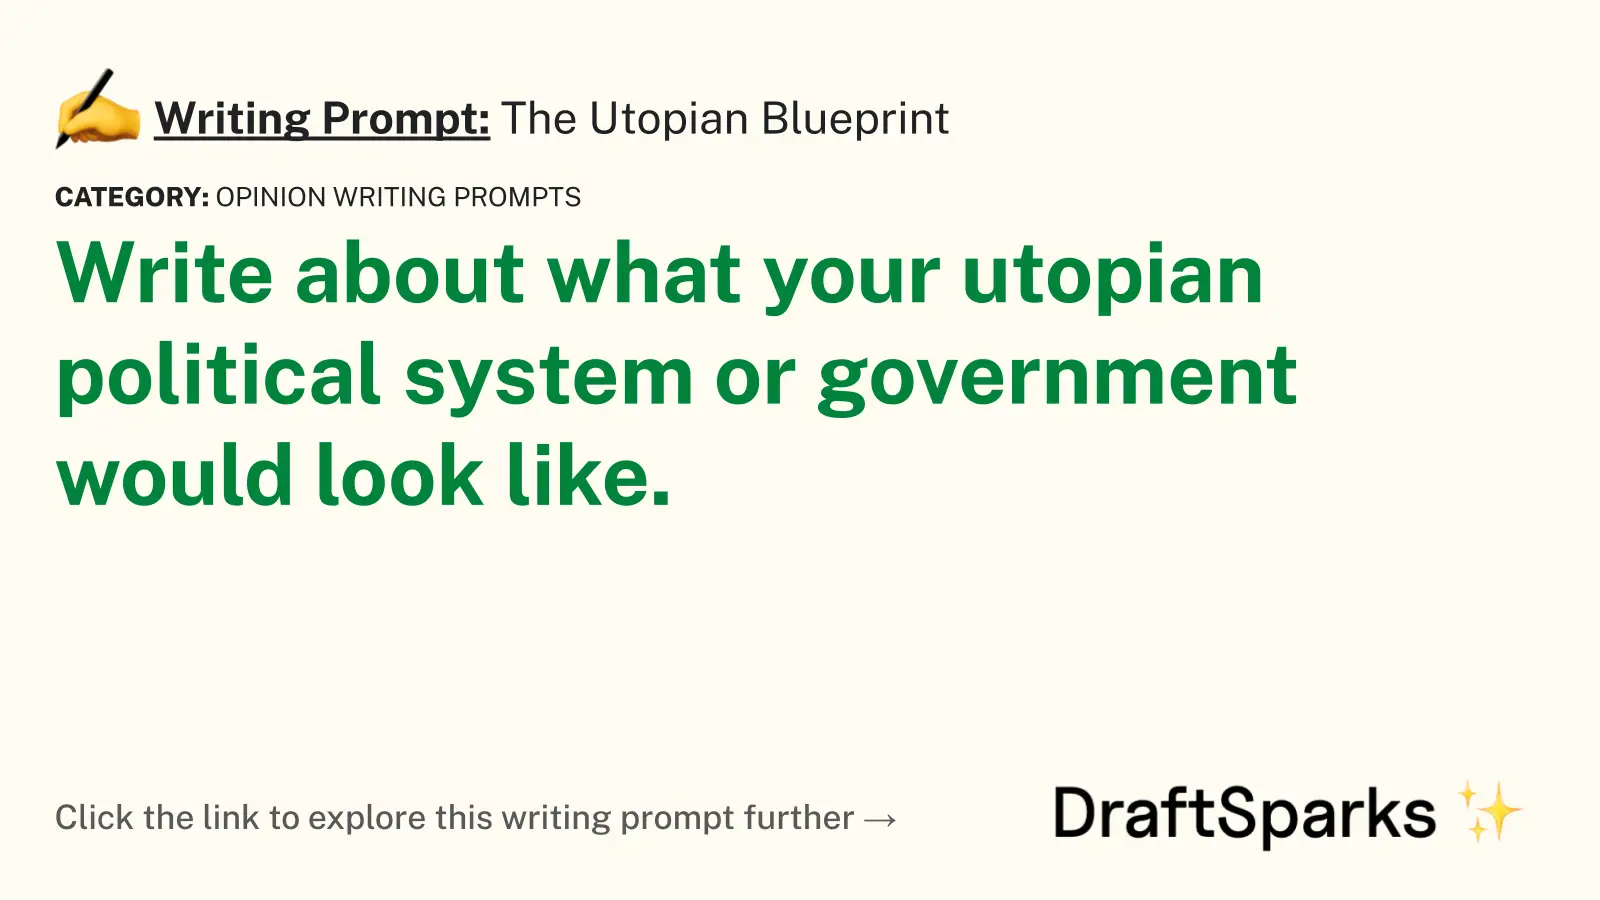 The Utopian Blueprint